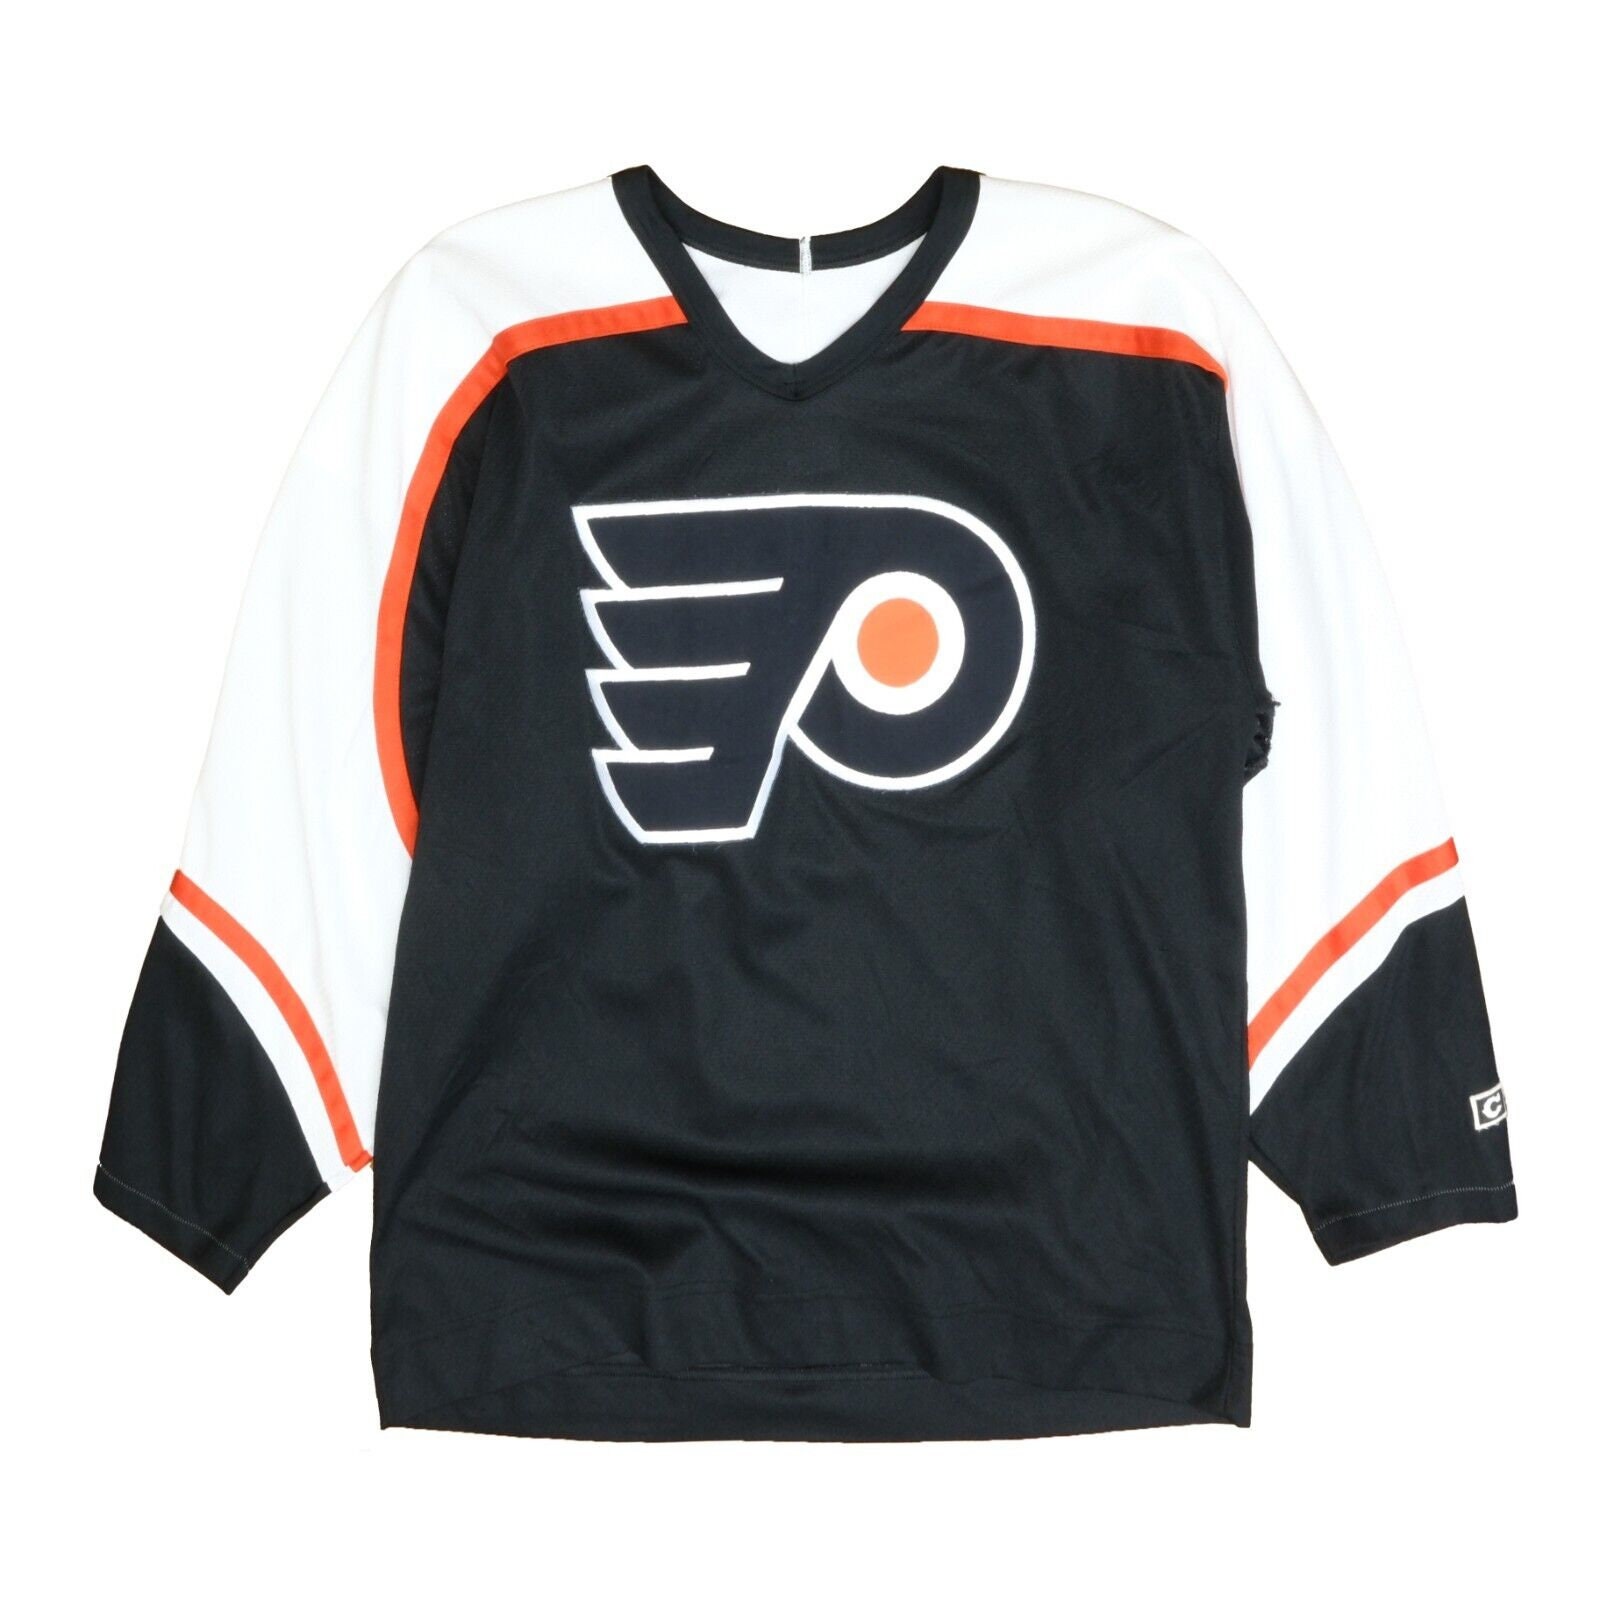 Grading Philadelphia Flyers Jersey Concepts